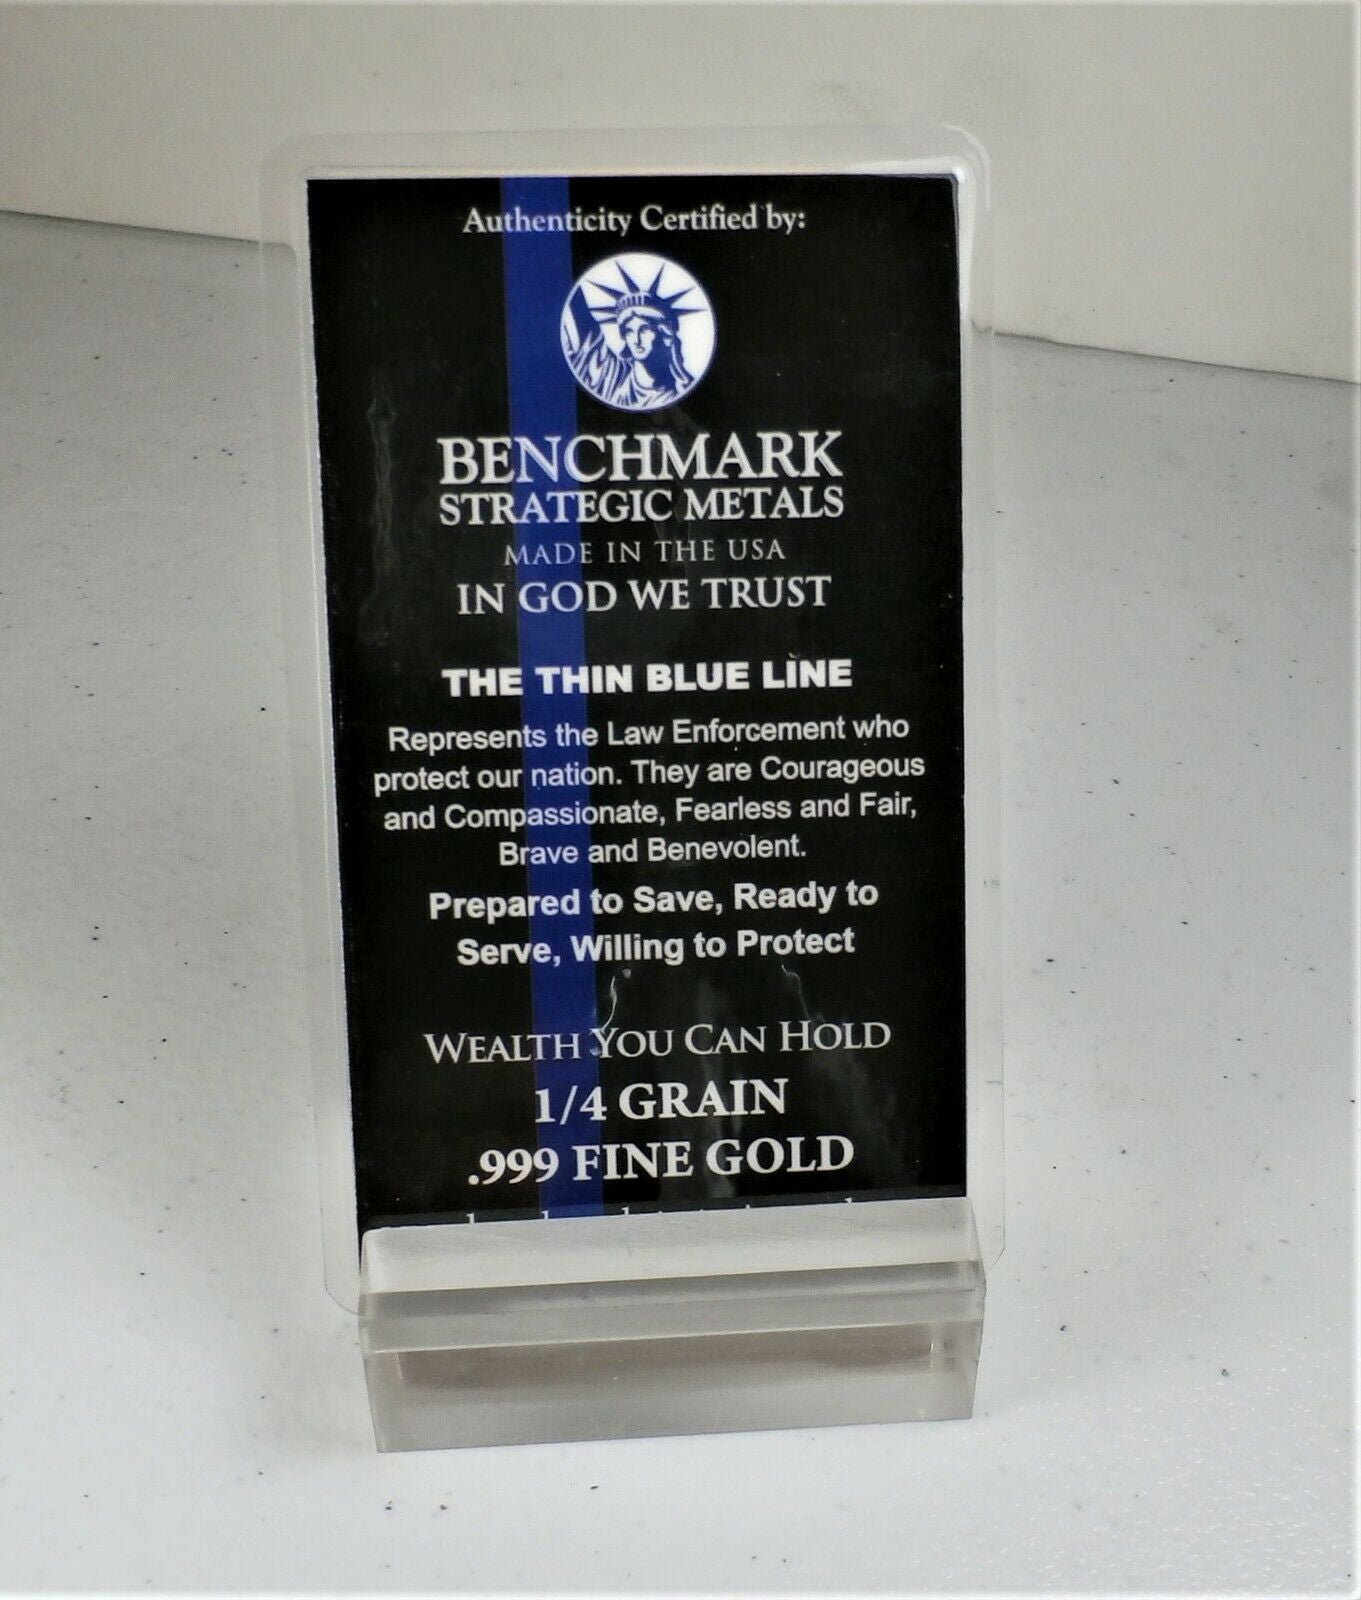 LOT 10 X 1/4 GRAIN .9999 FINE 24K GOLD BULLION BARS “THIN BLUE LINE LAW ENFORCEMENT” - IN COA CARD